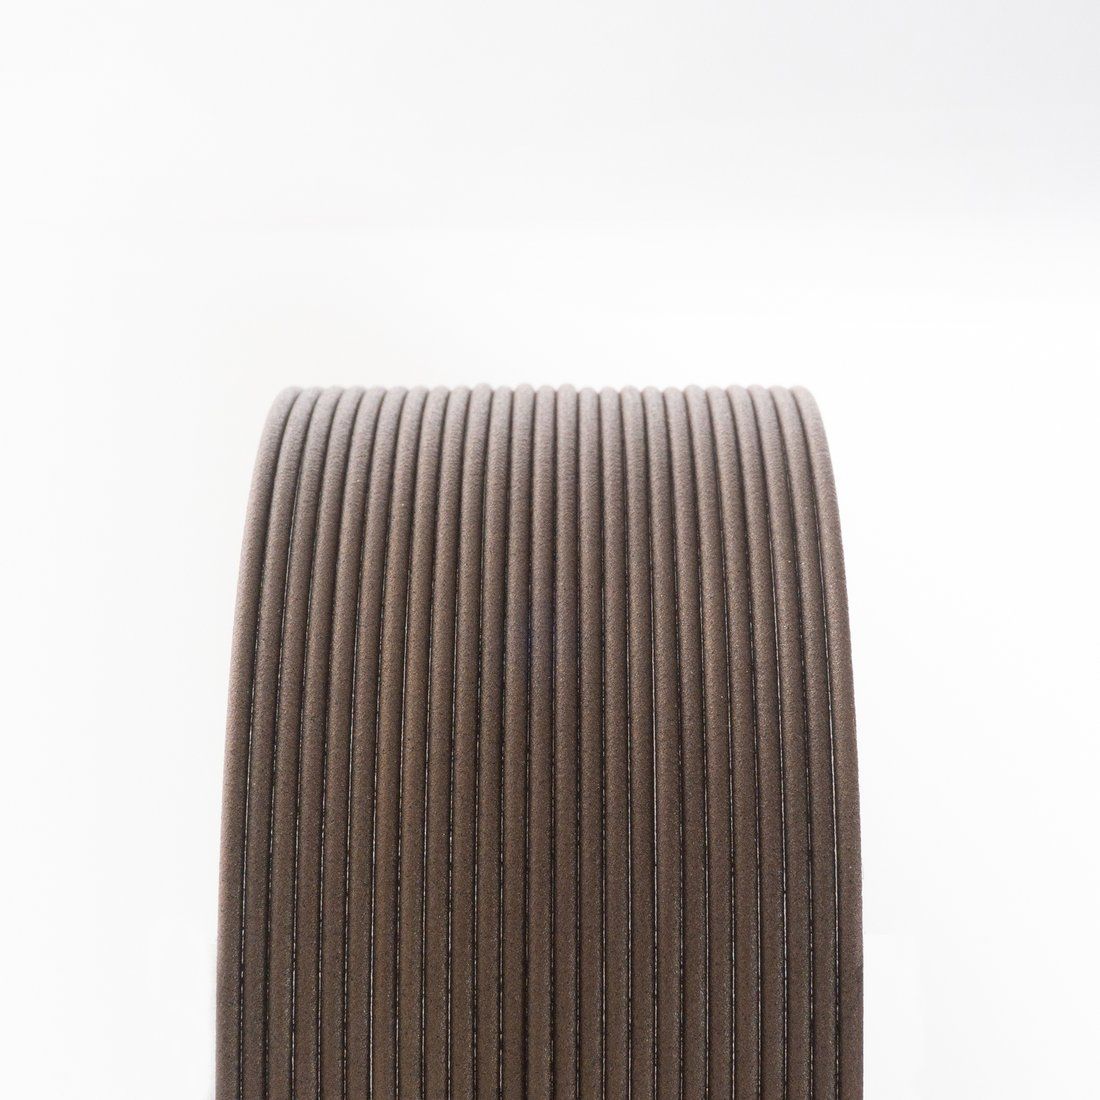 Matte Fiber HTPLA - Walnut Wood 1.75mm 3D printing Filament